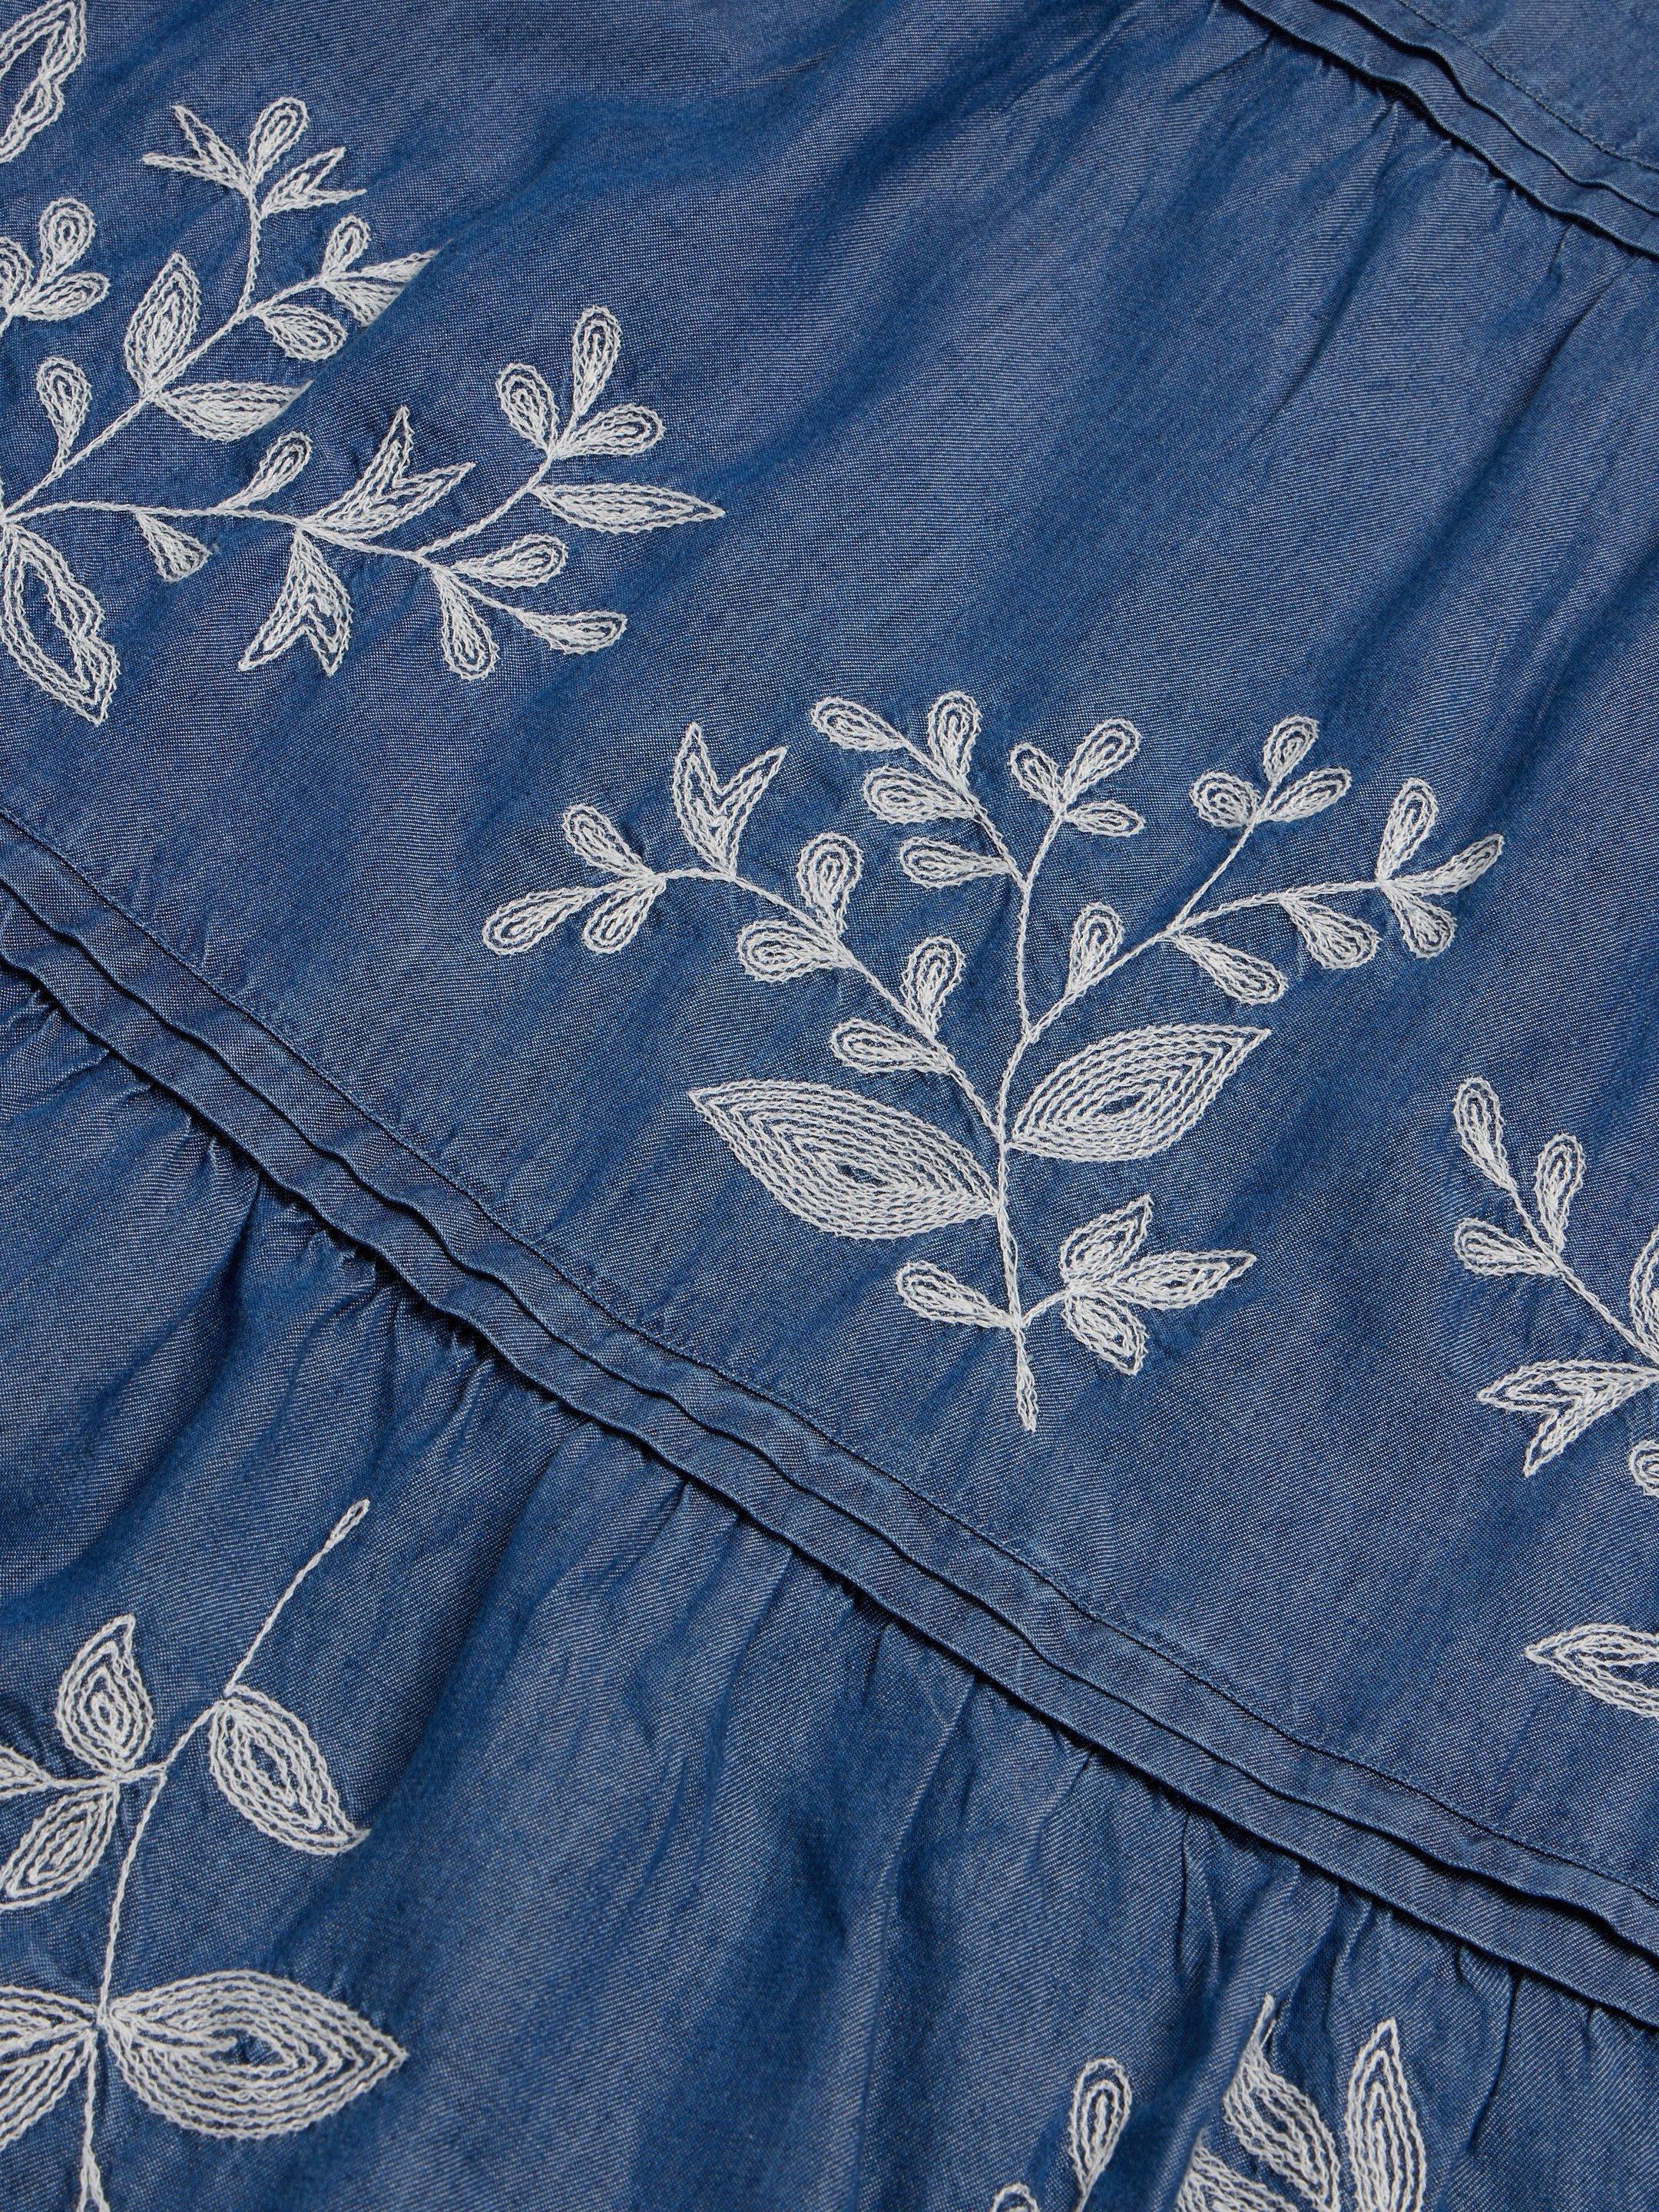 Isla Embroidered Denim Skirt in LGT DENIM - FLAT DETAIL